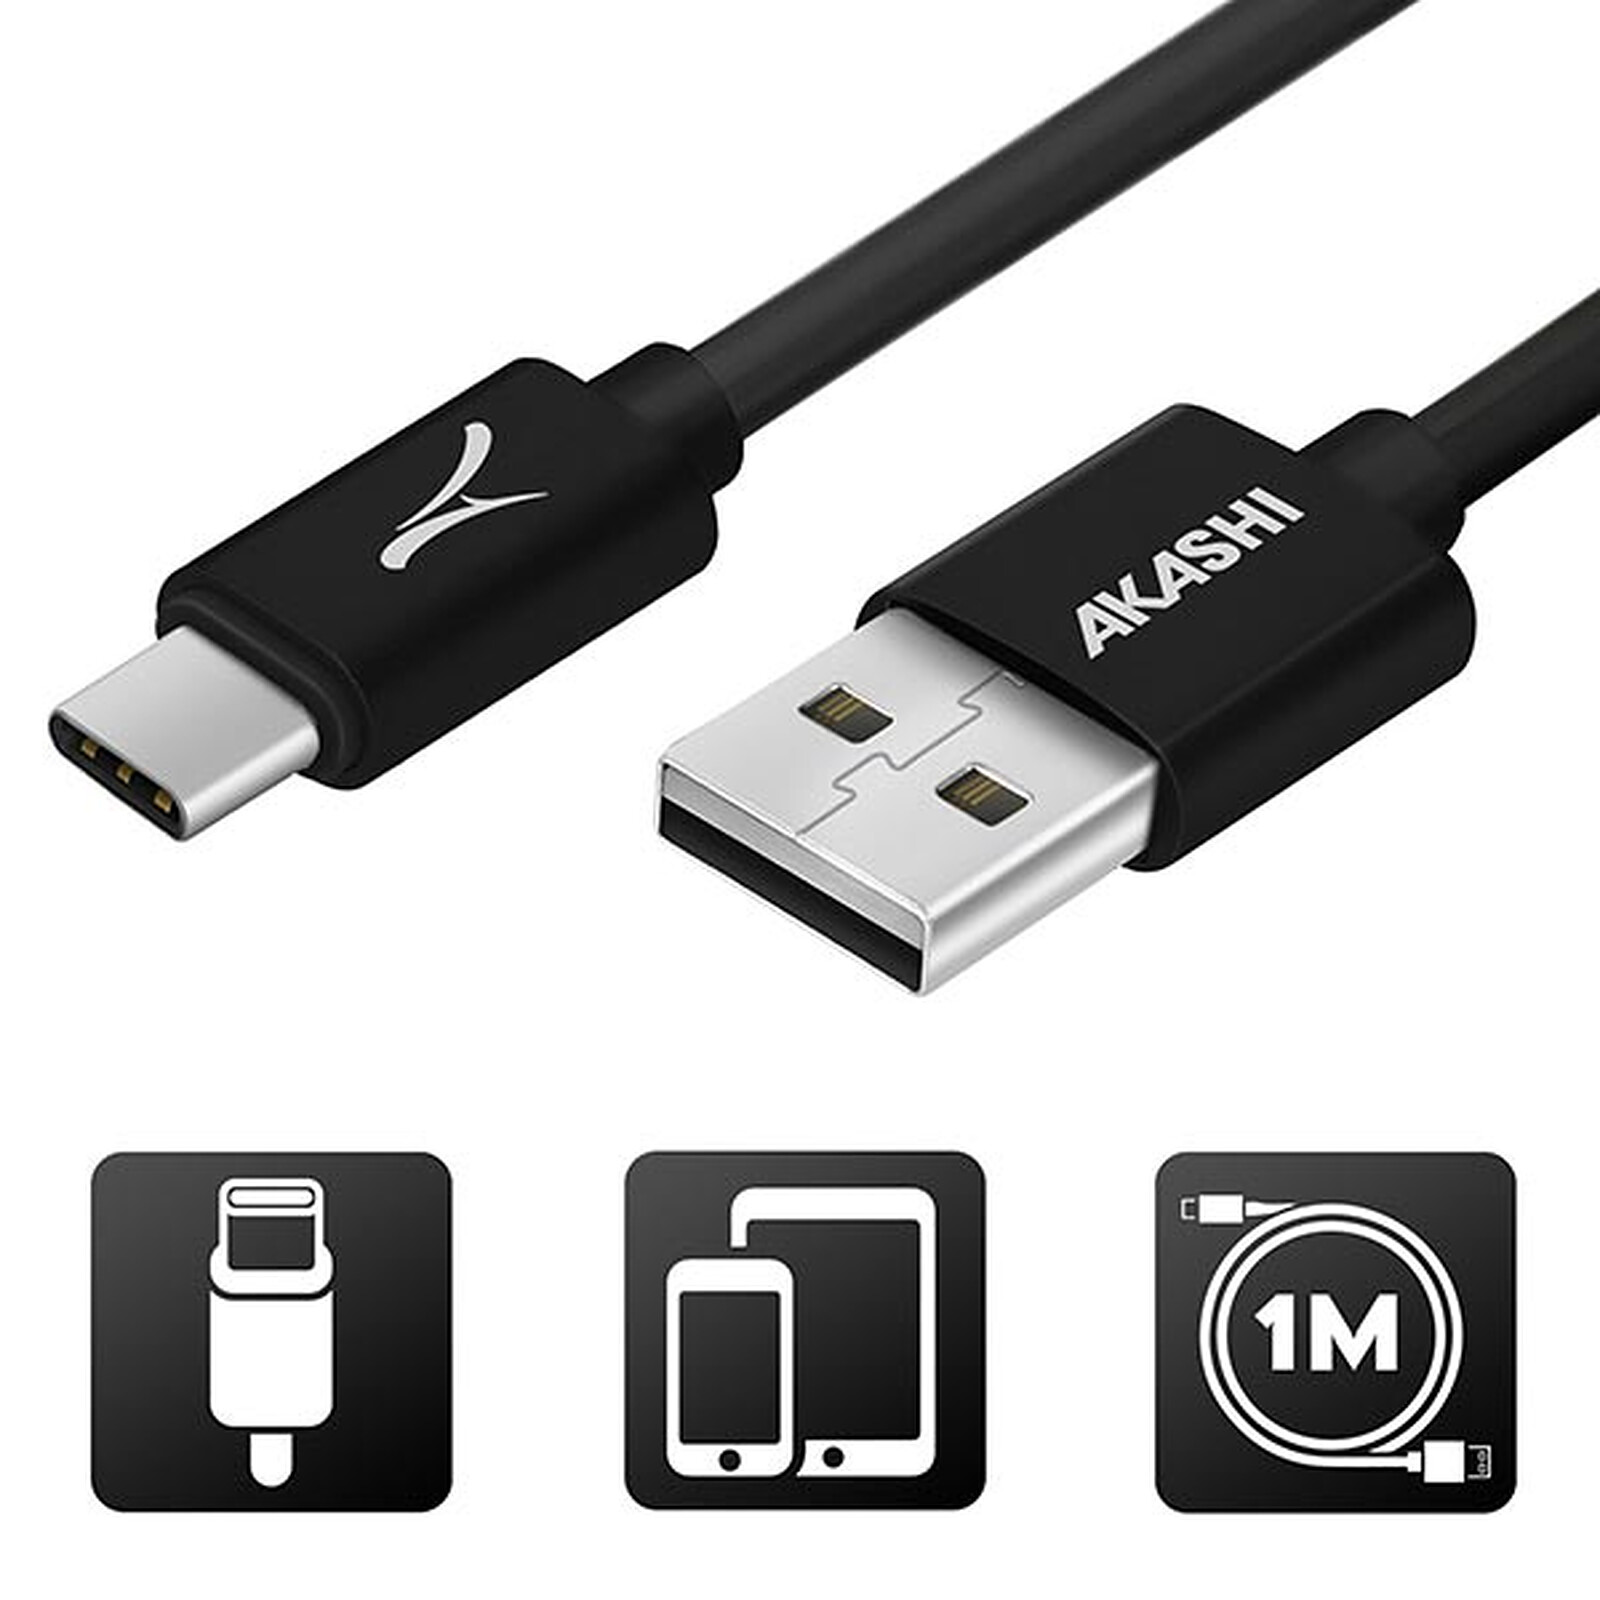 Akashi Adaptateur USB Femelle vers USB-C Mâle Noir - Câble